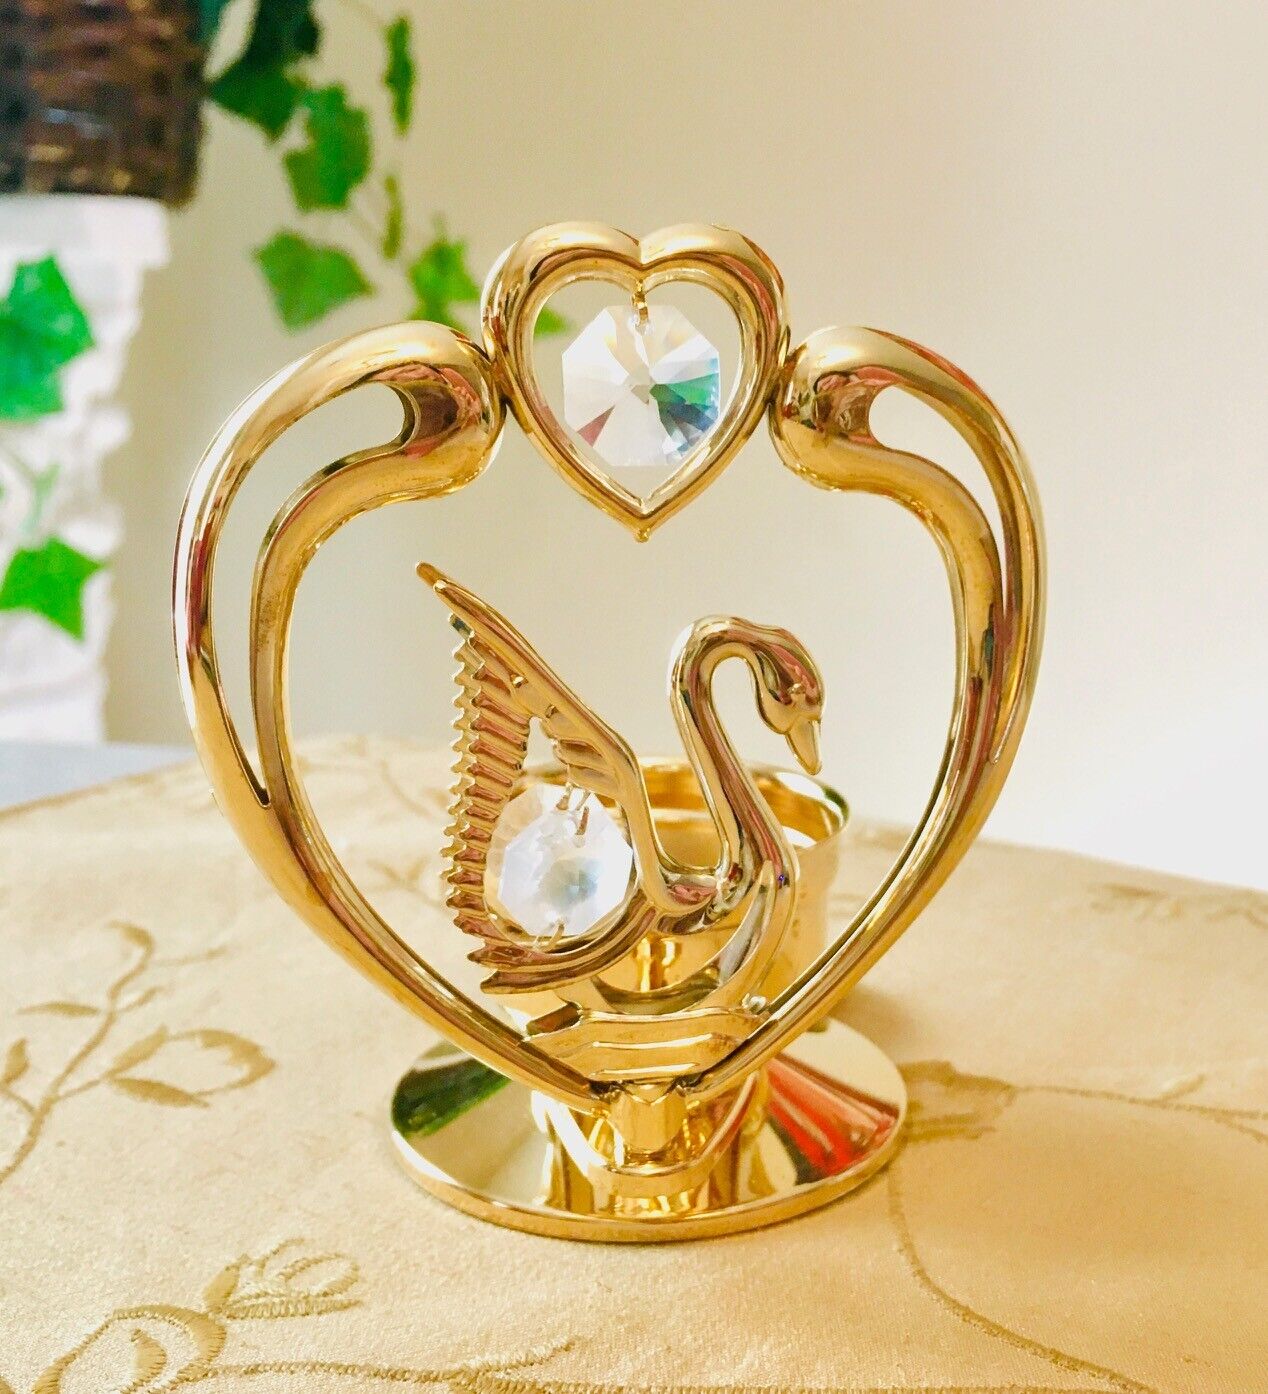 Mascot 24K Gold Plated  Metal Swan Votive Candle Holder w/ Crystal RARE VINTAGE